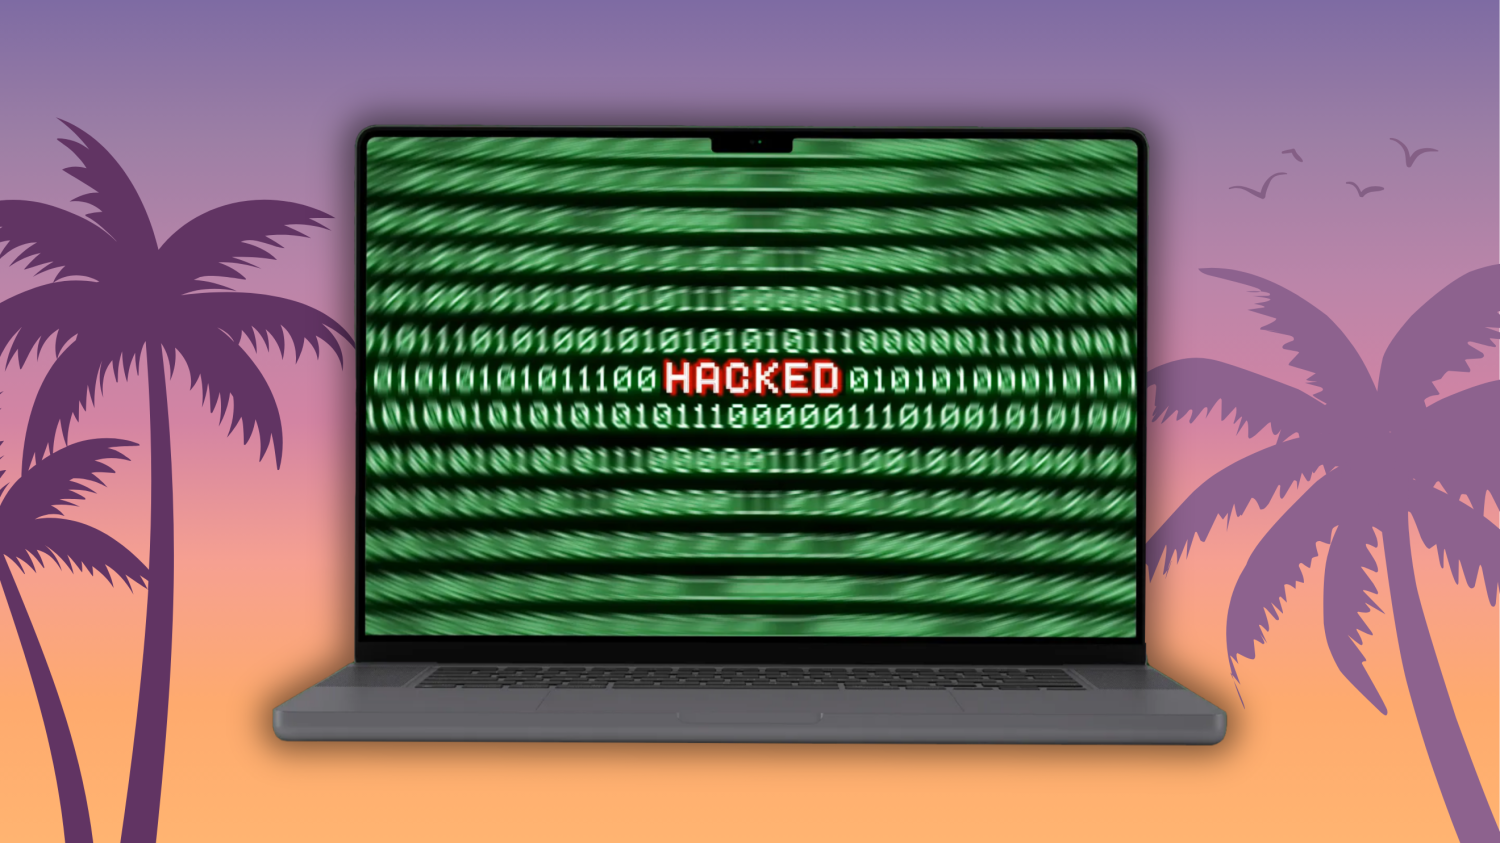 gta6 hacked hackers security malware